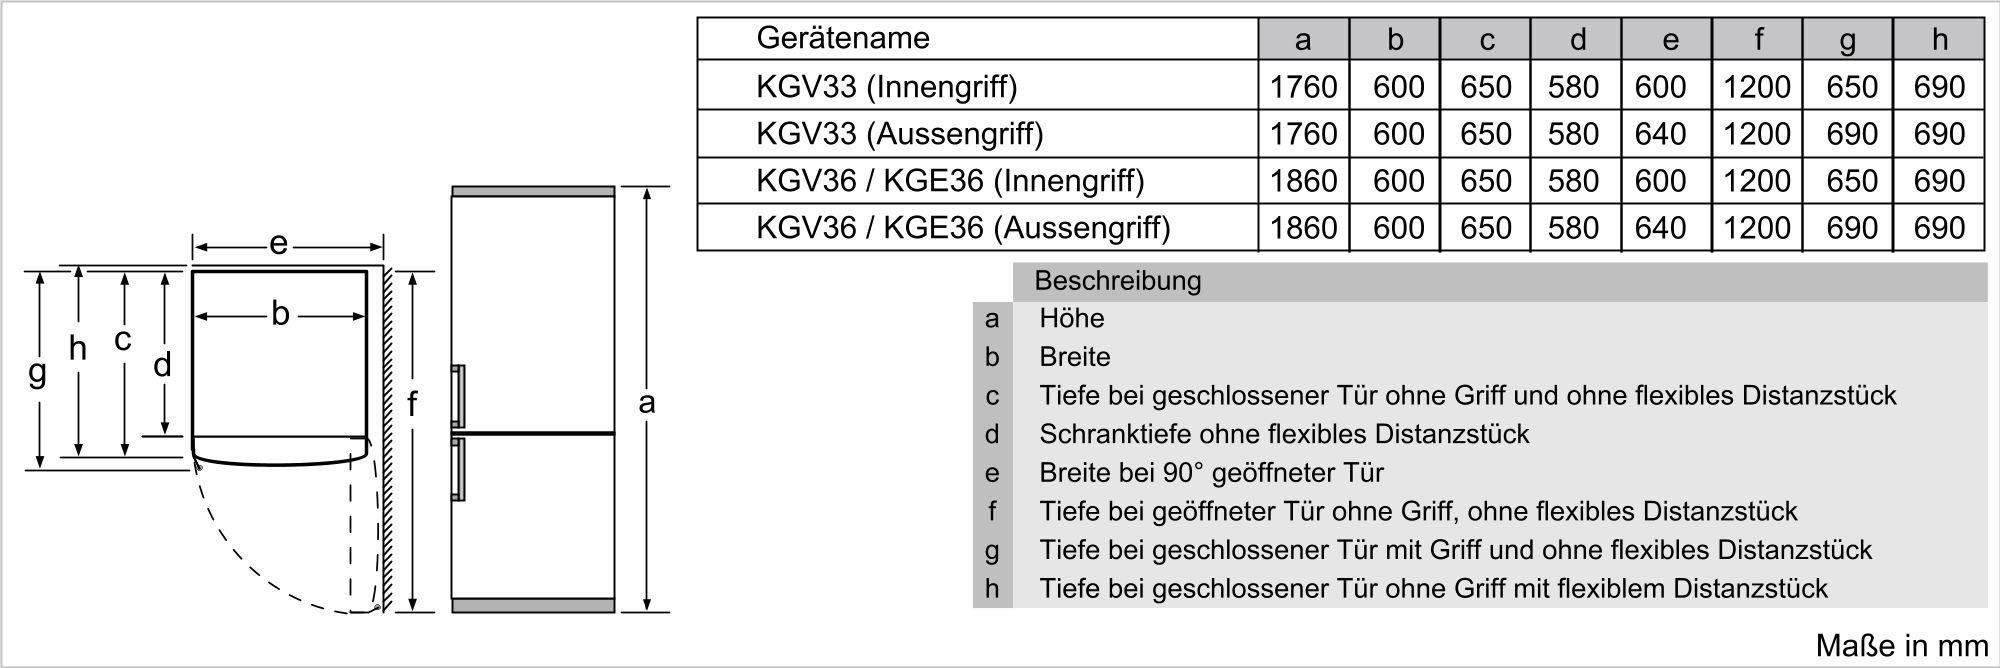 KGE36ALCA, Kühl-/Gefrierkombination optik edelstahl breit cm 60 hoch, BOSCH cm 186